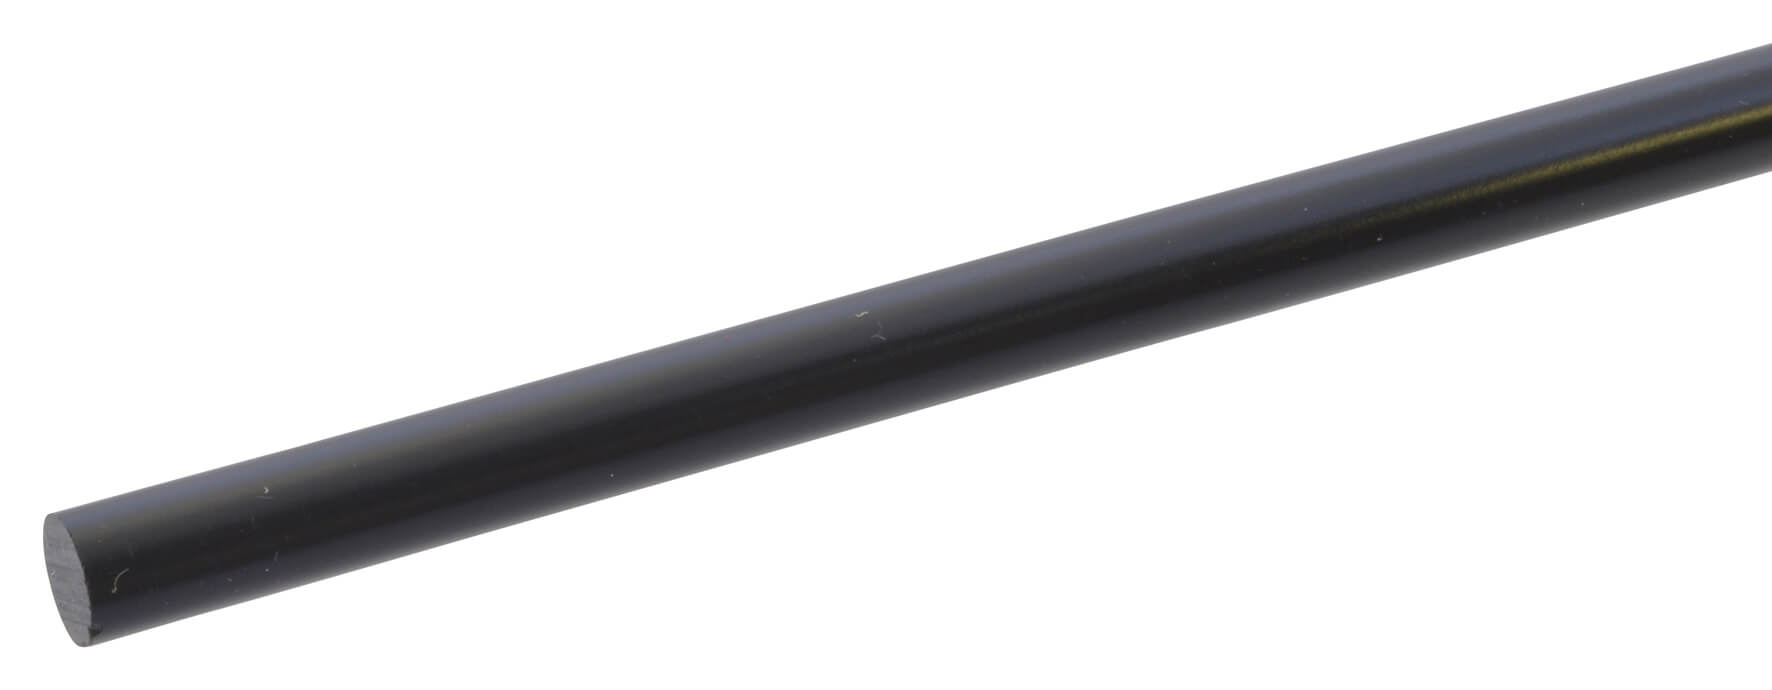 Acrylic Rod 6.4mm x 610mm - Solid Black